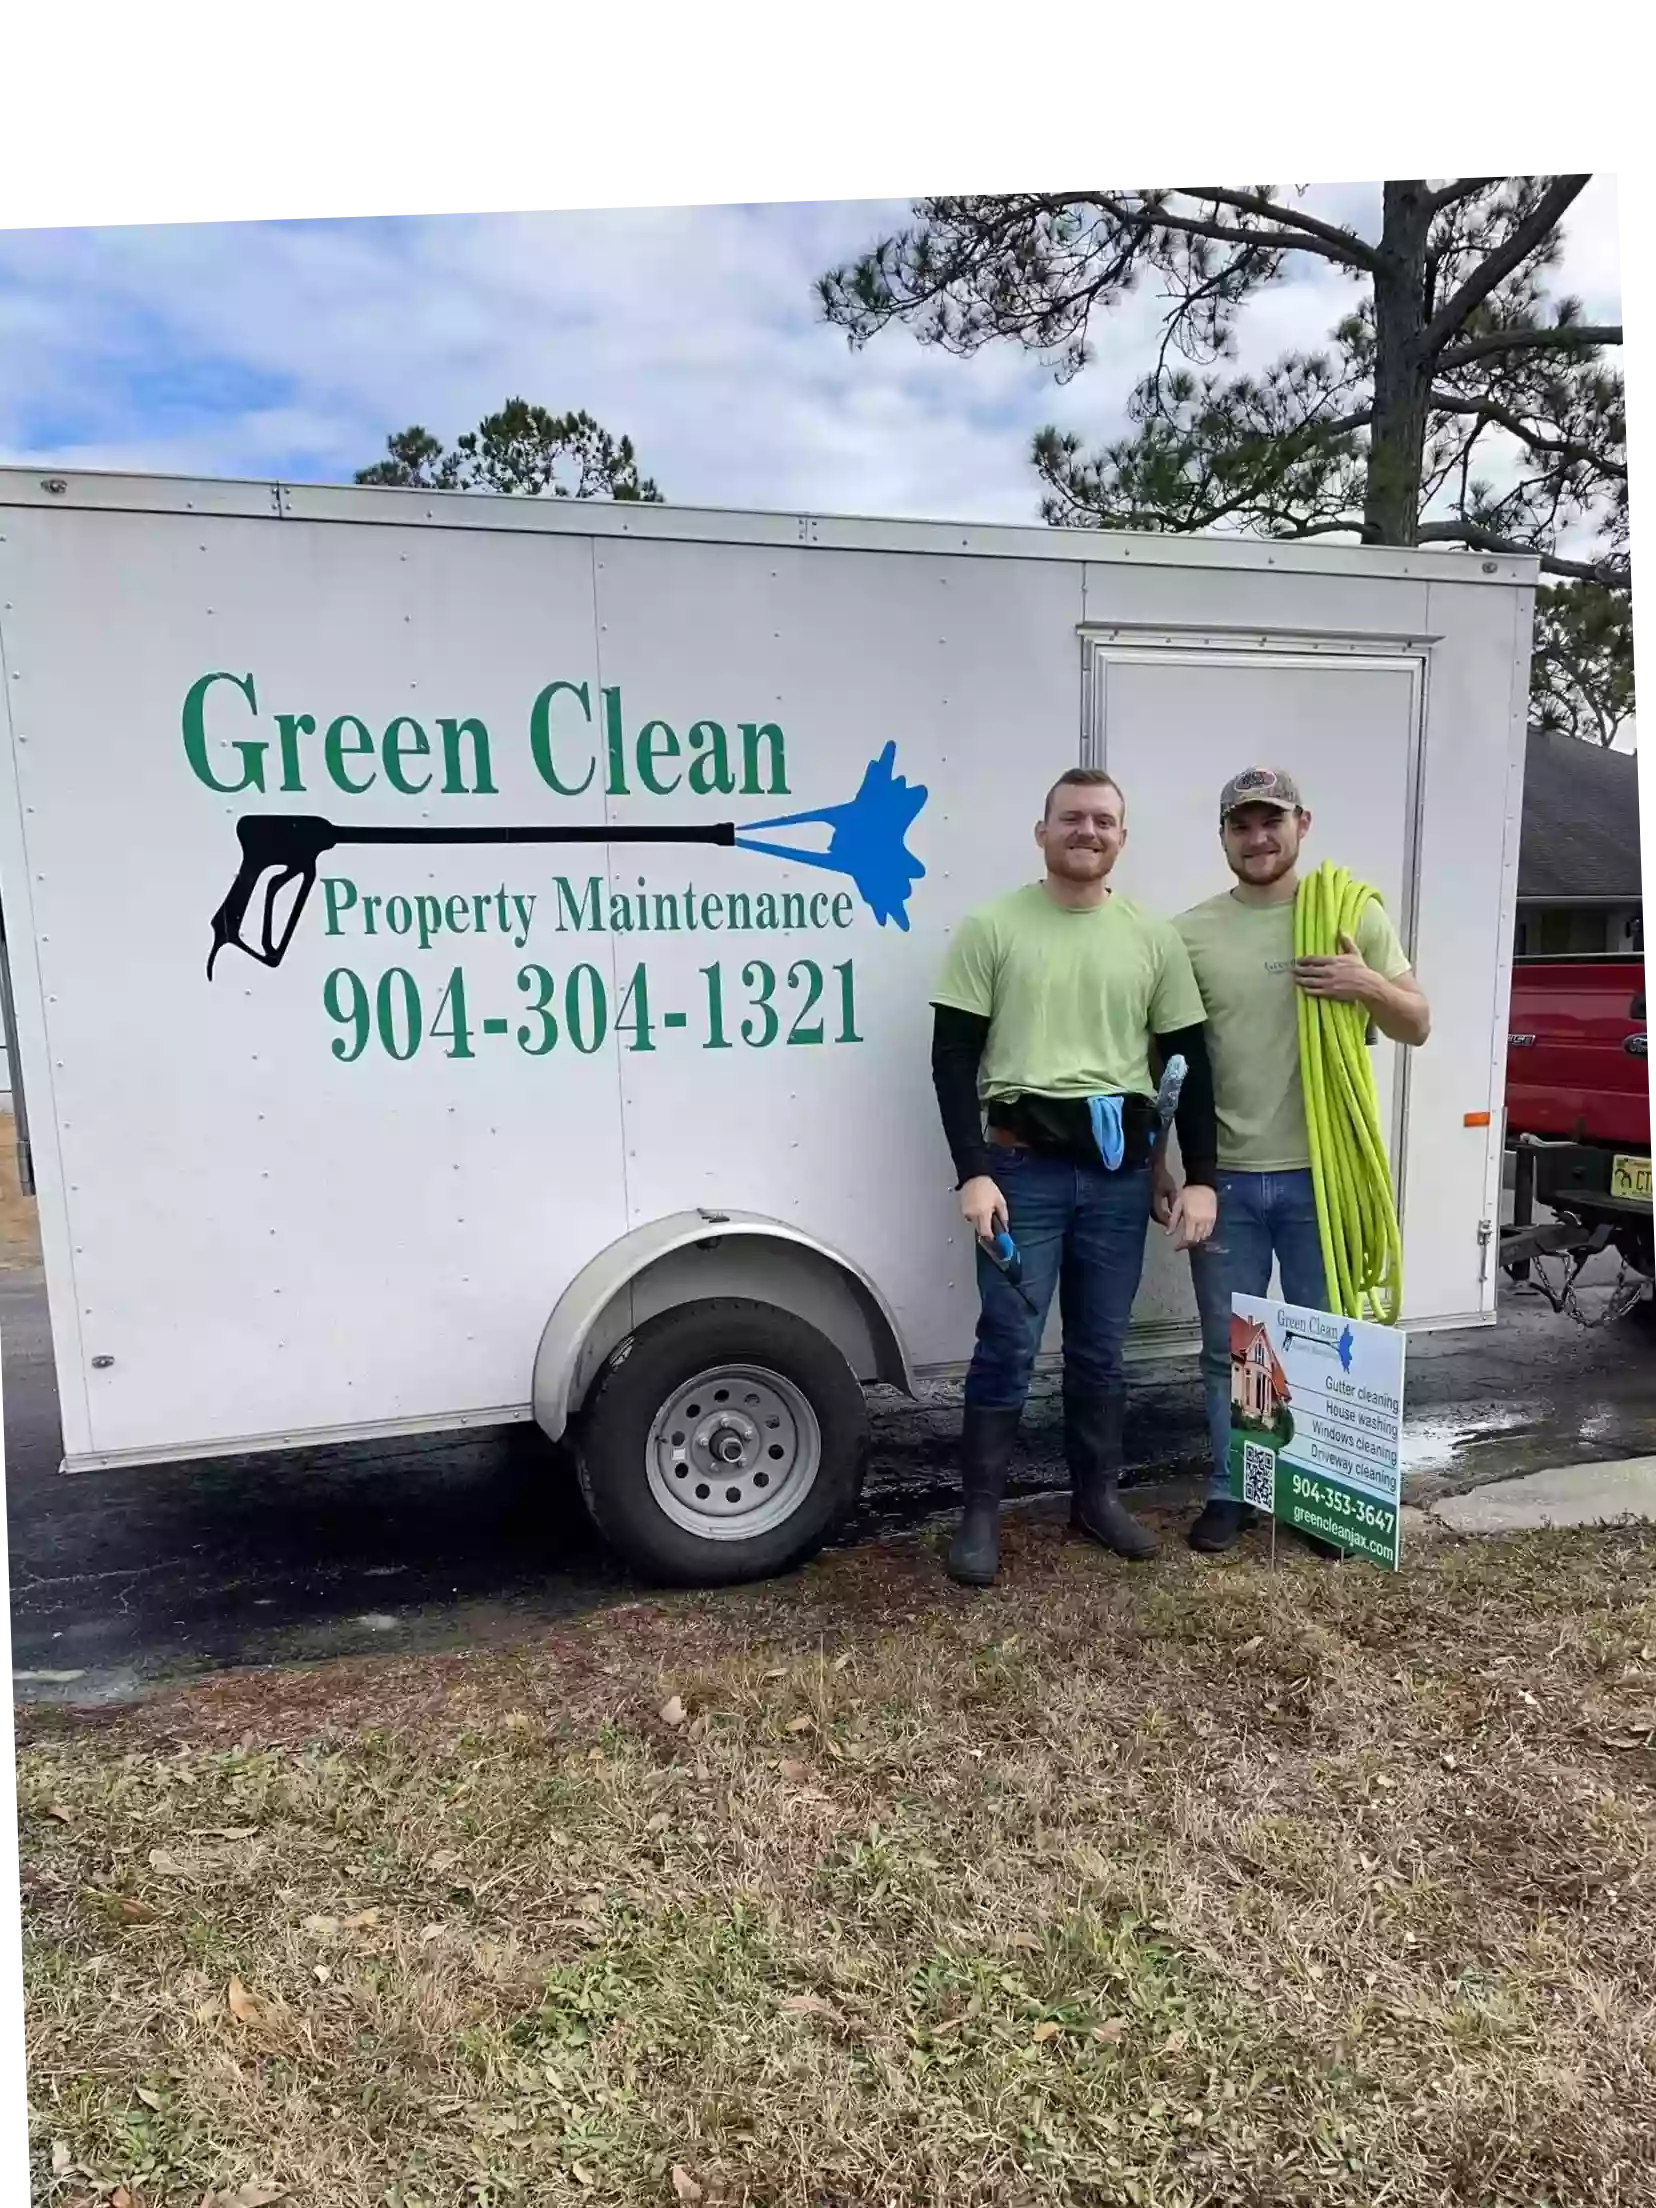 Green Clean Property Maintenance